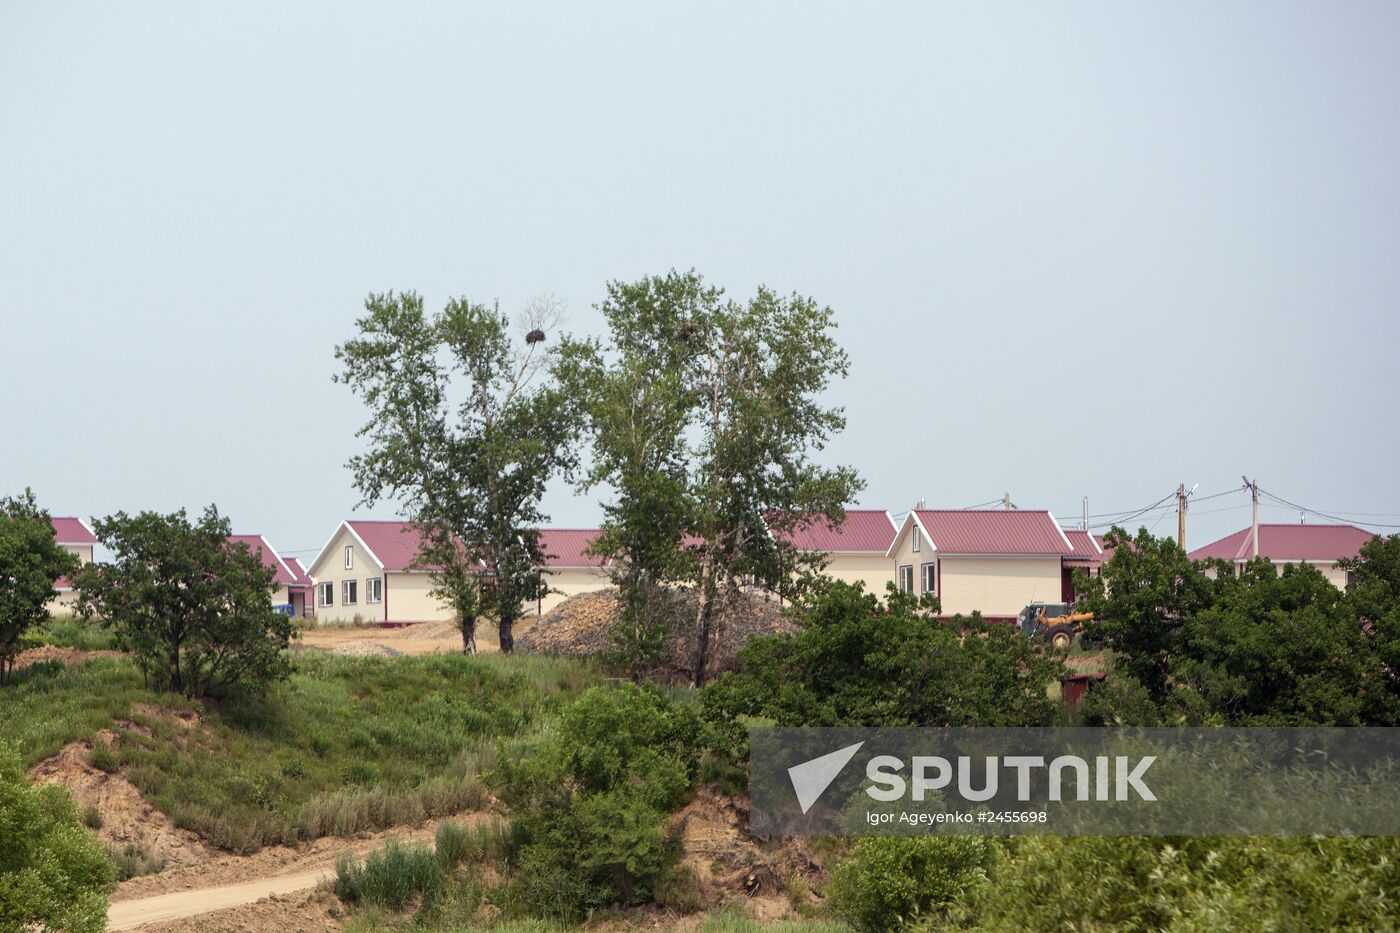 Houses built for flood victims in Amur Region